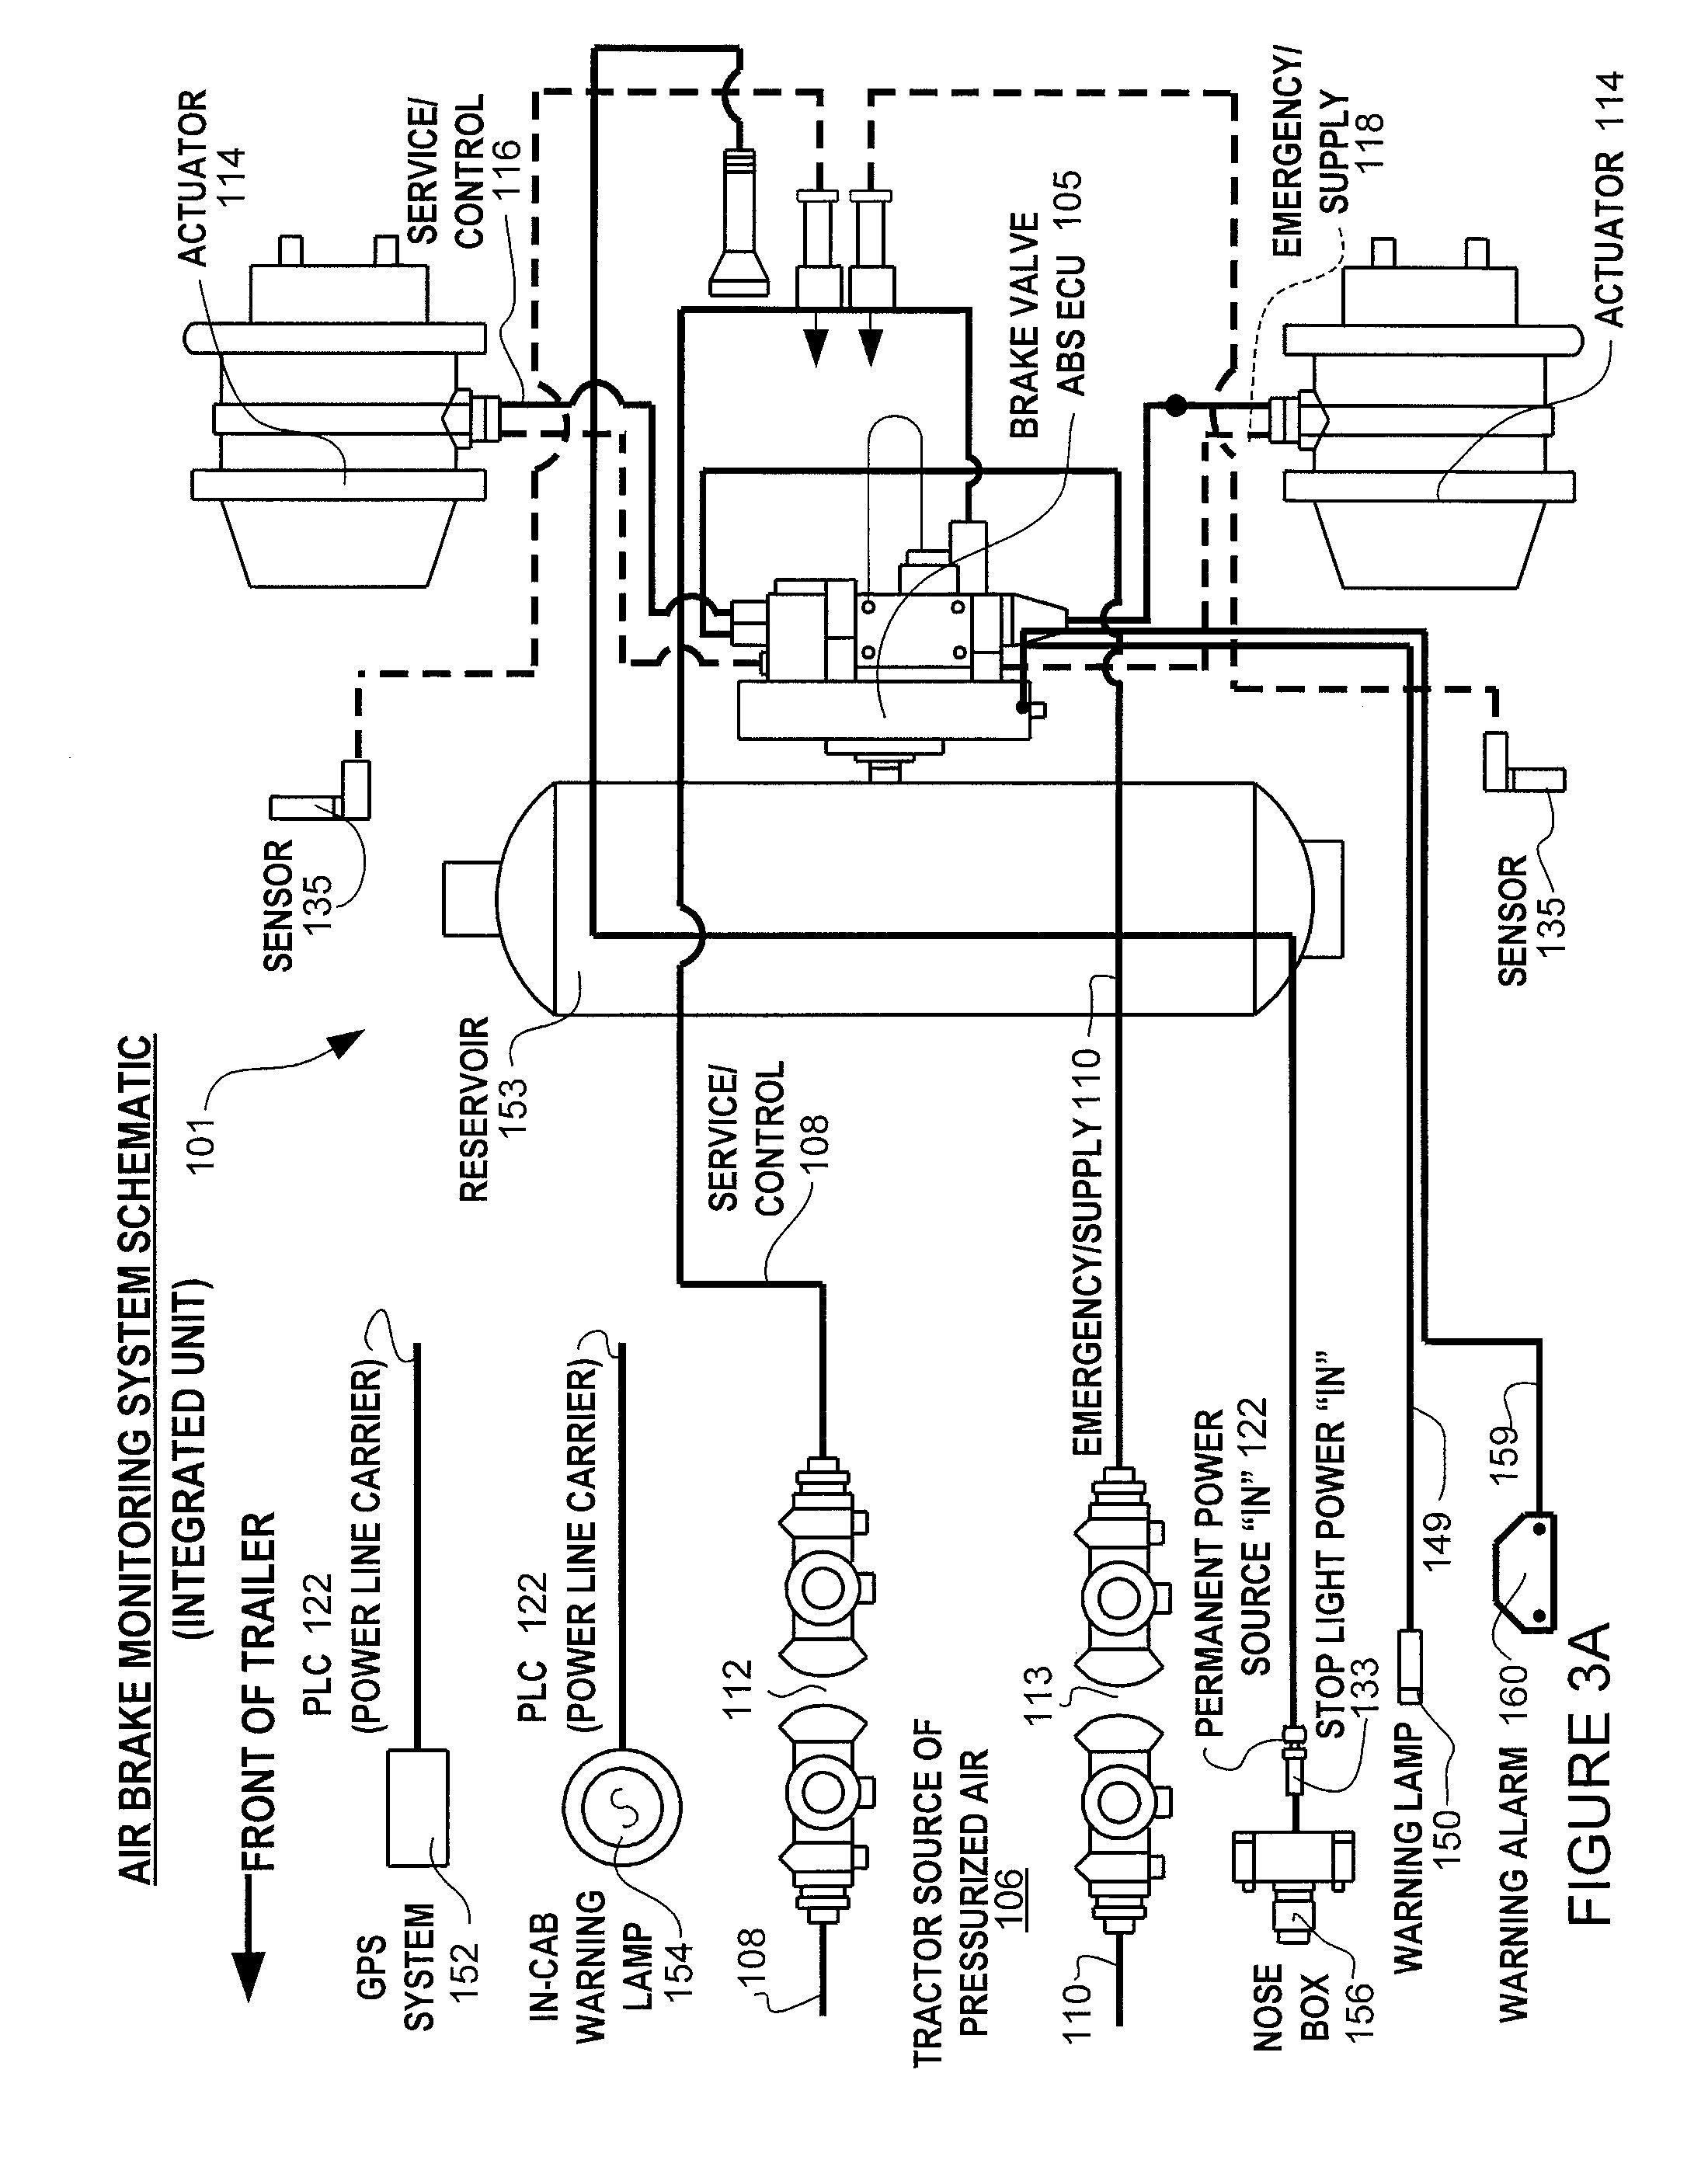 Diagram 2007 Kenworth Truck Wiring Diagrams Full Version Hd Quality Wiring Diagrams Avdiagrams Cefalubb It